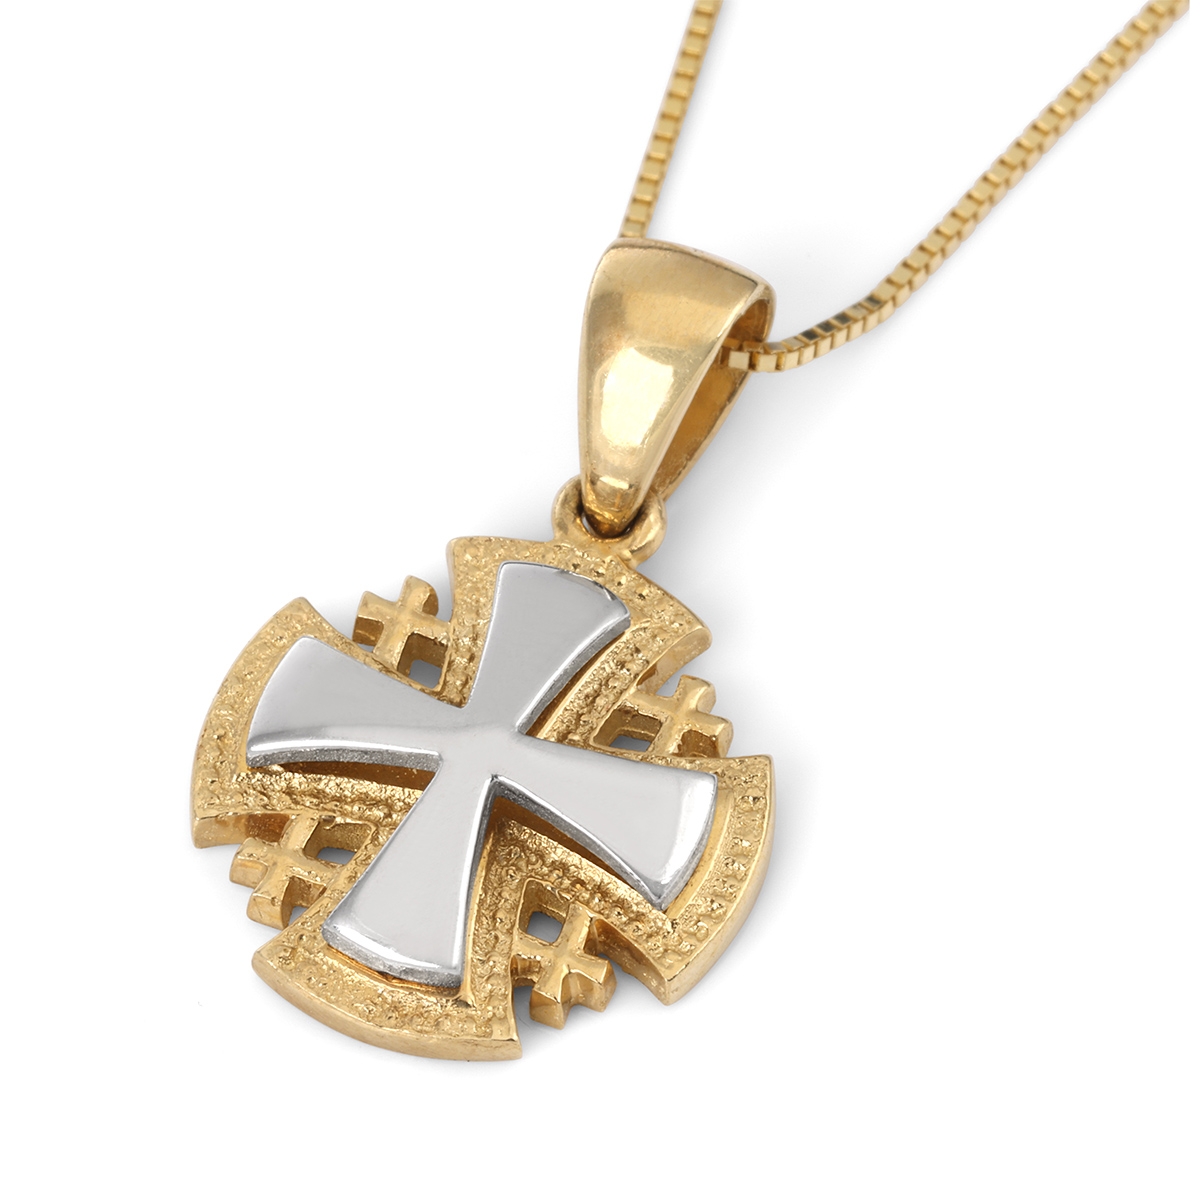 Anbinder Jewelry 14K Yellow & White Gold Jerusalem Cross Pendant Necklace - 1